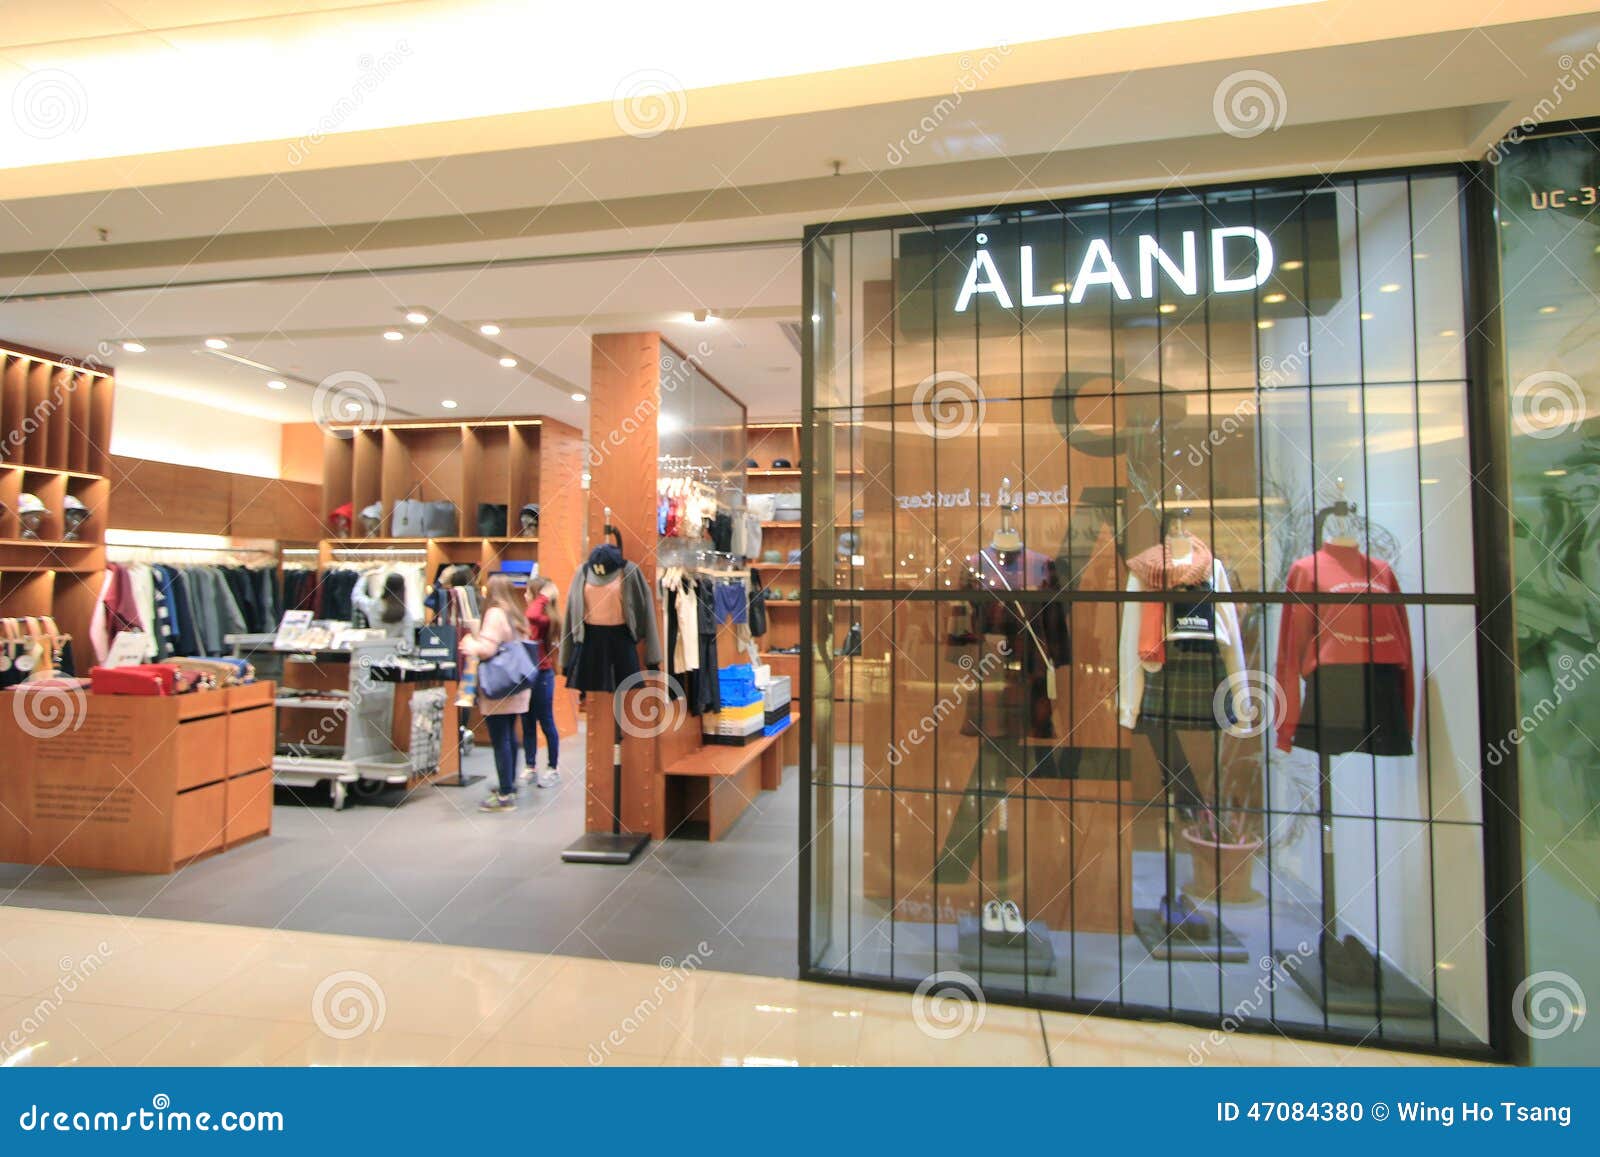 Aland Shop In Hong Kong Editorial Image Image Of Shop